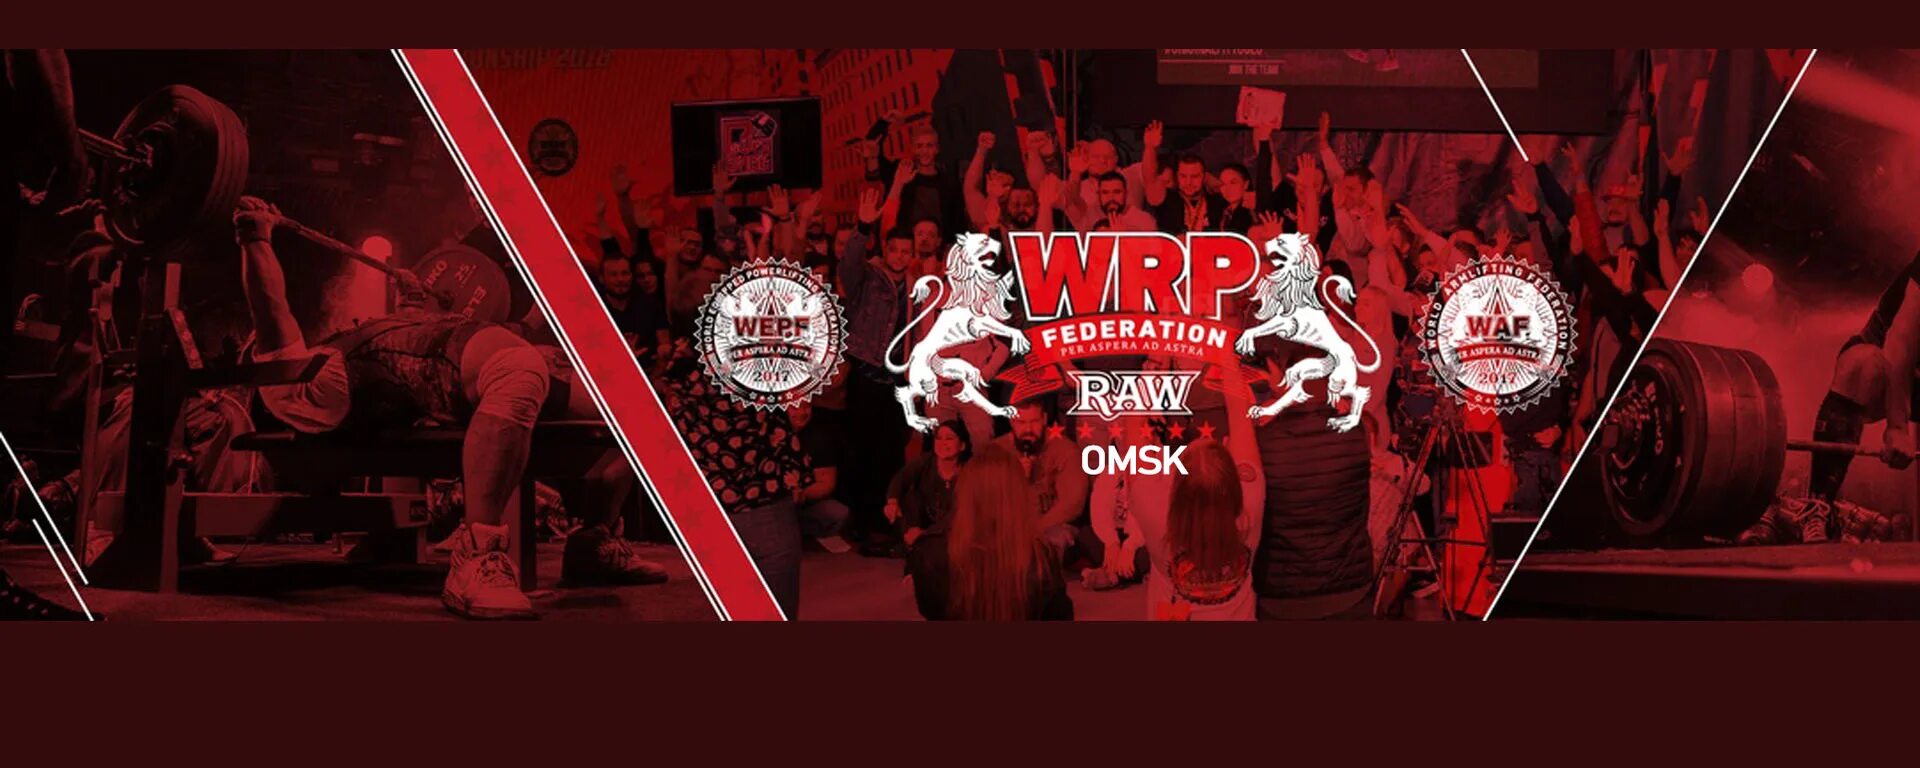 Федерация wrpf сайт. WRPF Федерация. World Raw Powerlifting Federation. WRPF Raw. Союз пауэрлифтеров России логотип.